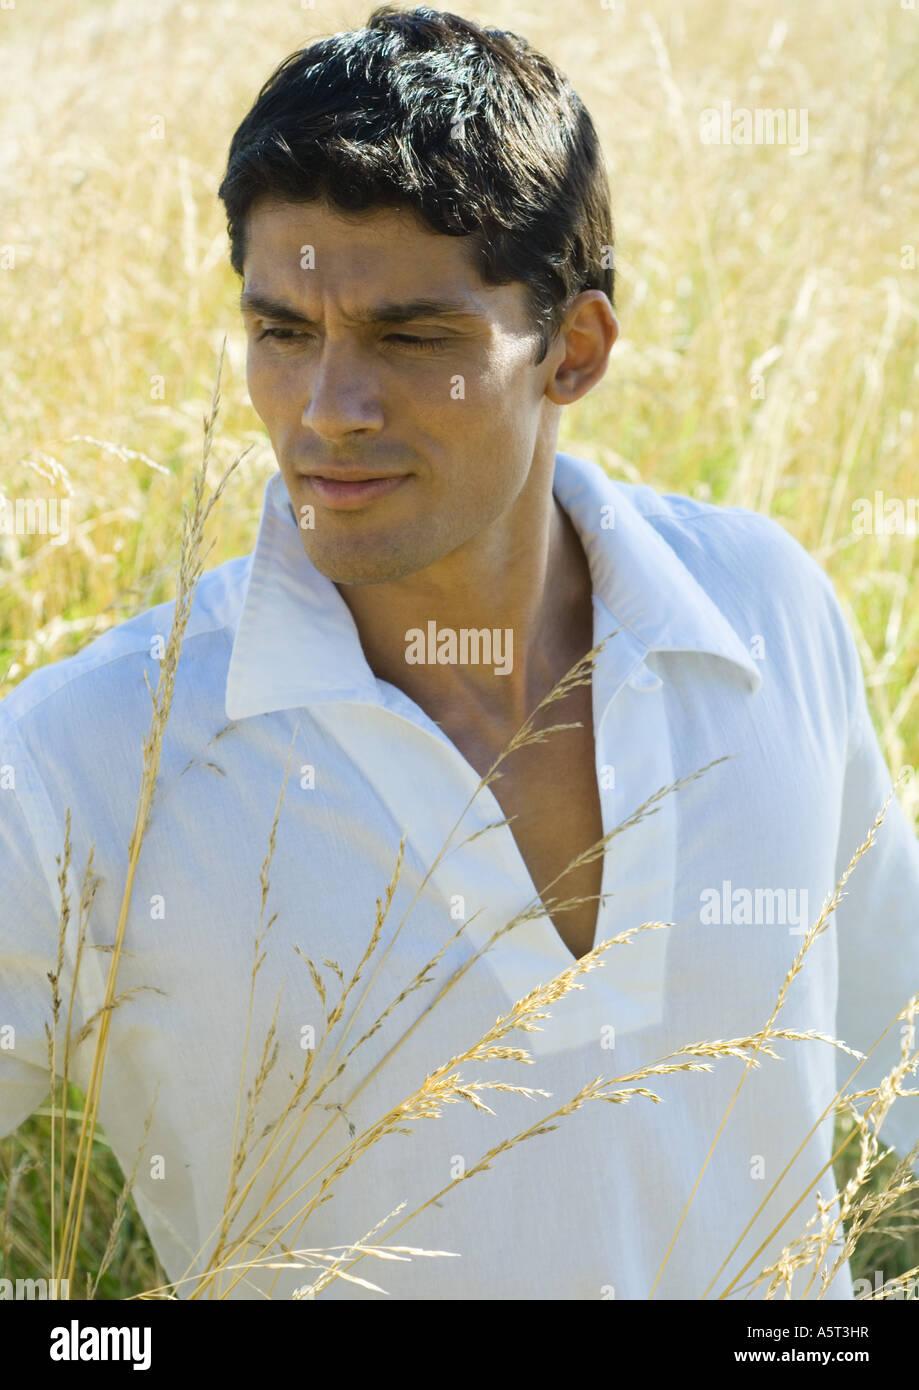 Man standing in field, portrait Stock Photo